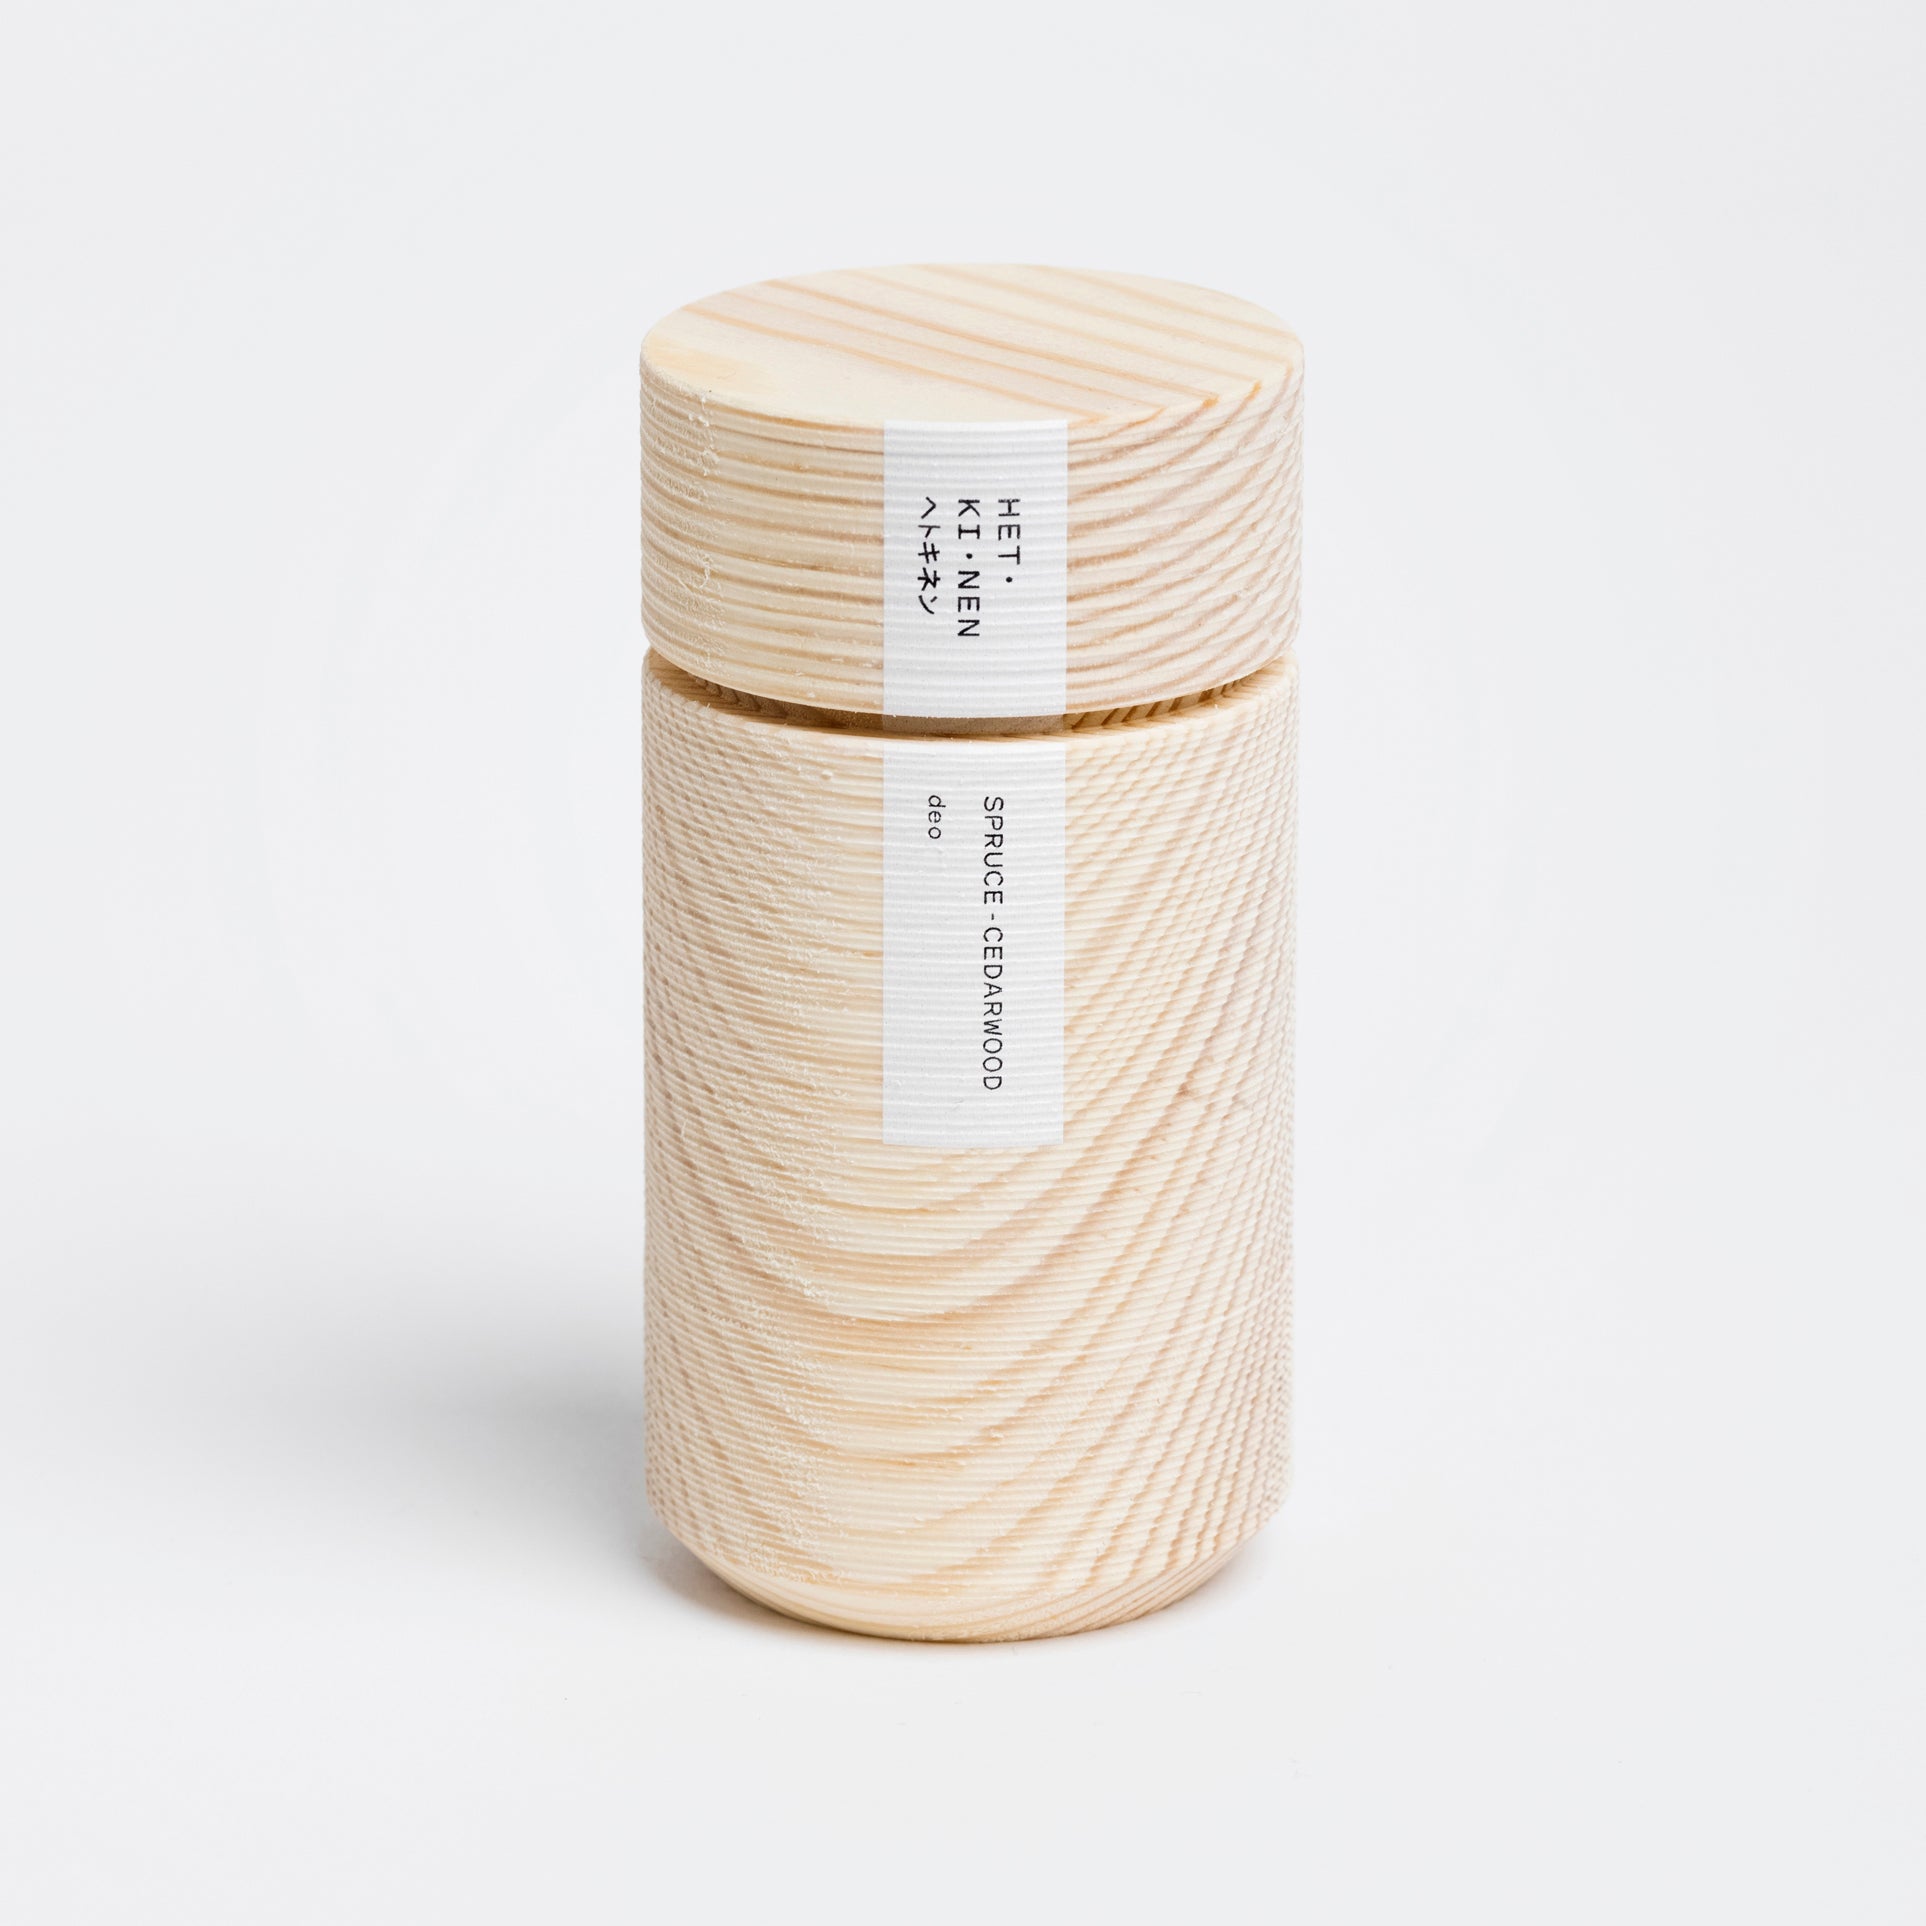 Hetkinen Spruce-cedarwood Deodorant Cream